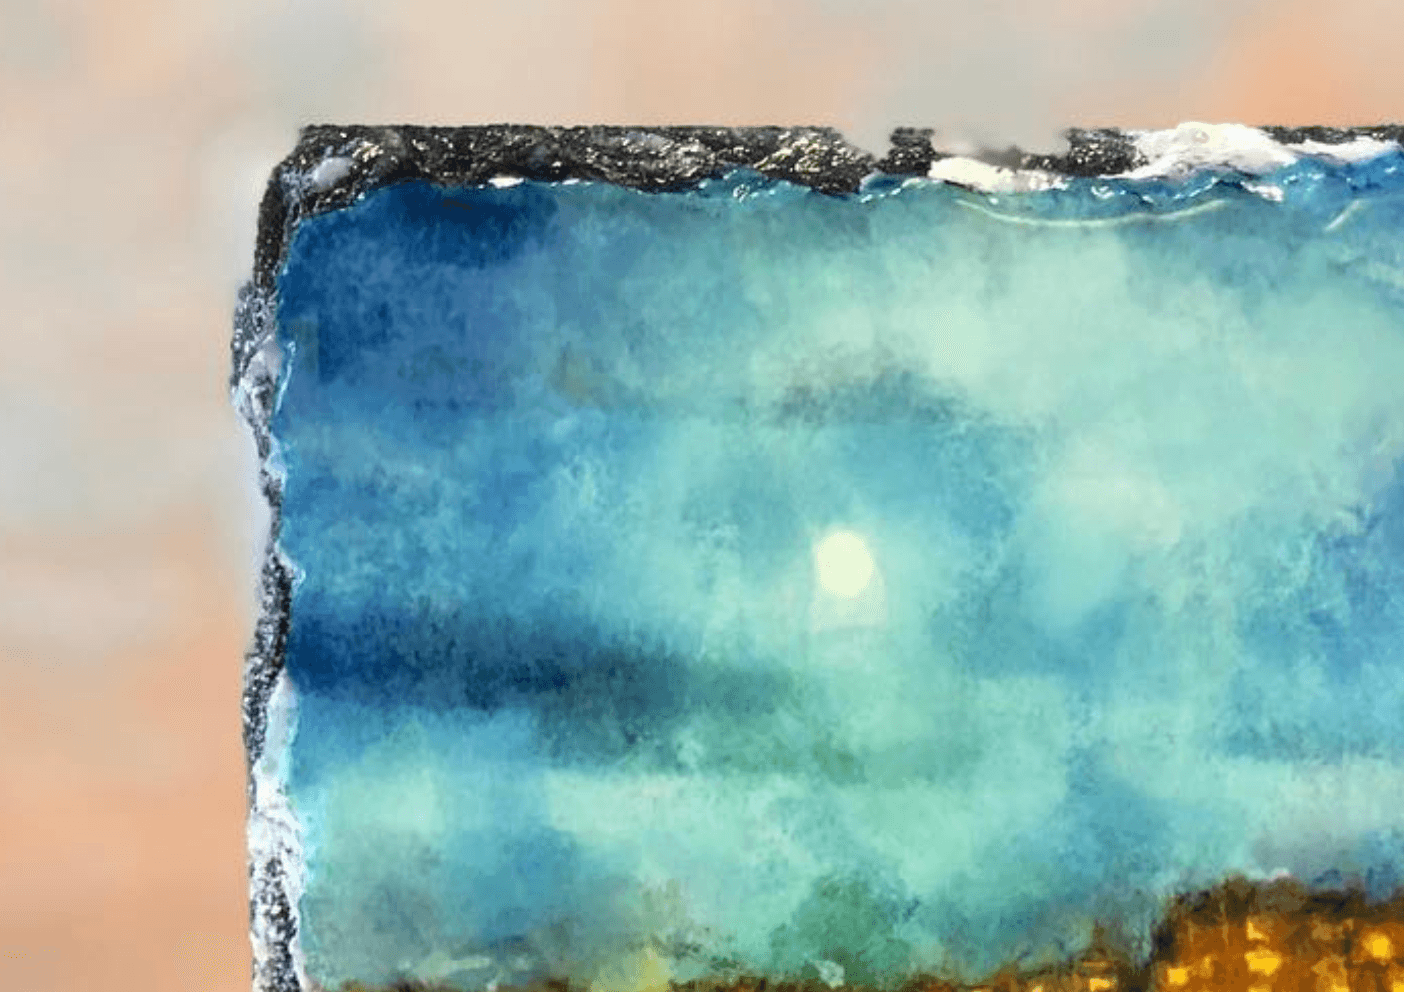 A Moonlit Stag Slate Art-Slate Art-Scottish Highlands & Lowlands Art Gallery-Paintings, Prints, Homeware, Art Gifts From Scotland By Scottish Artist Kevin Hunter